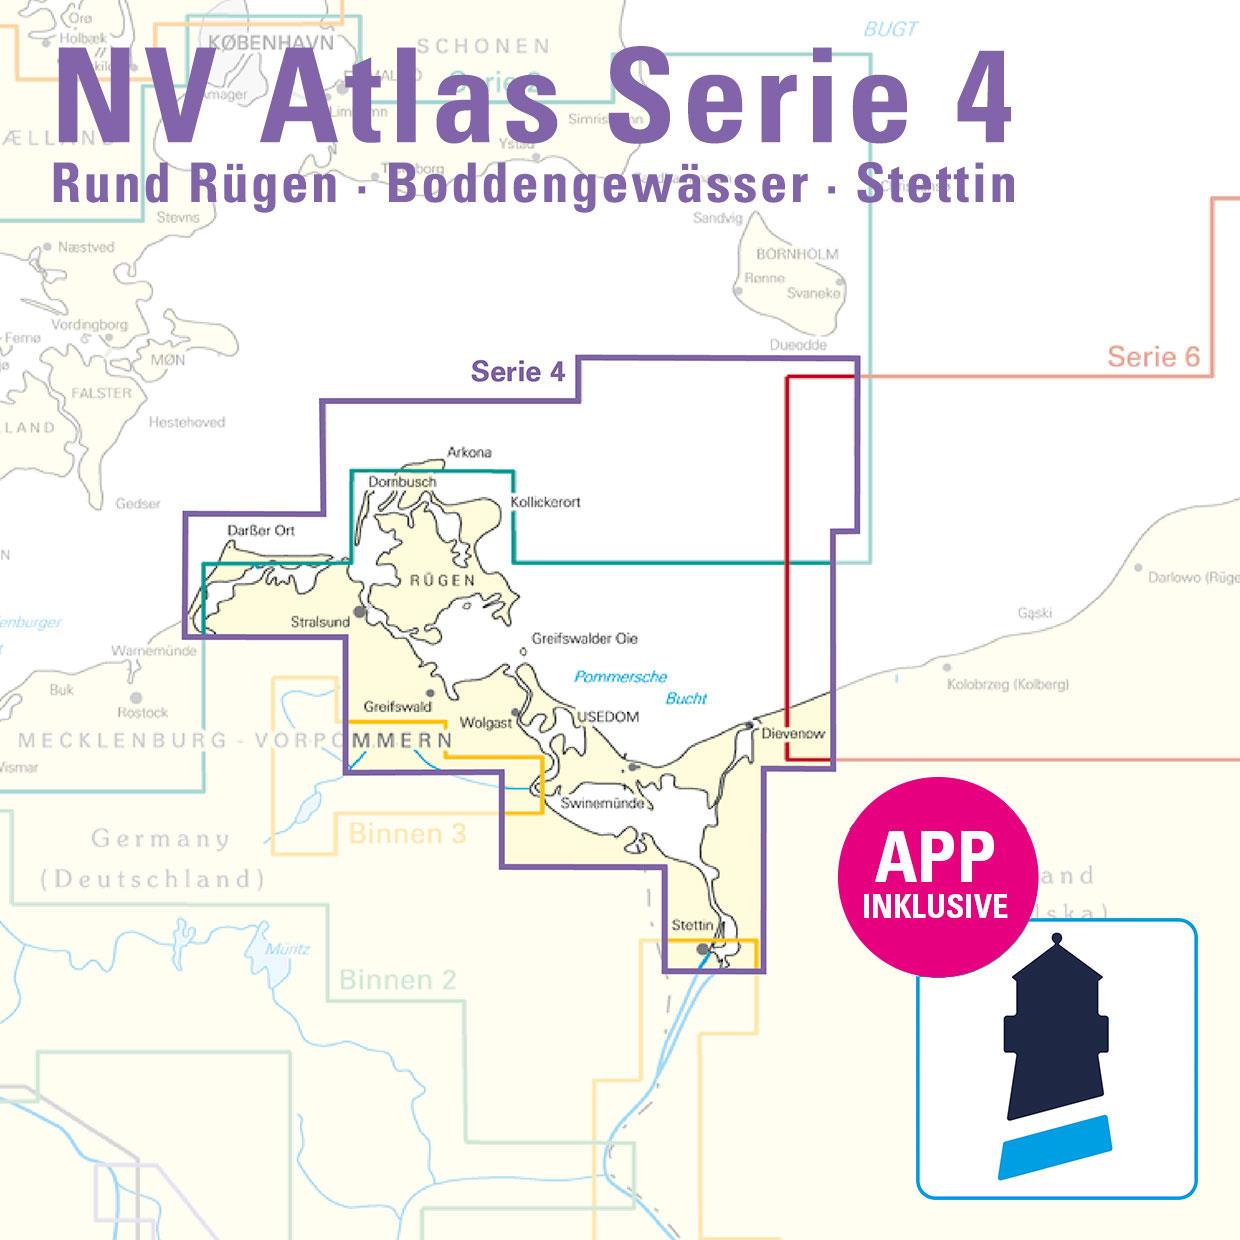 Subscription - NV Charts Baltic Region 4 East Germany, Rügen to Szczecin